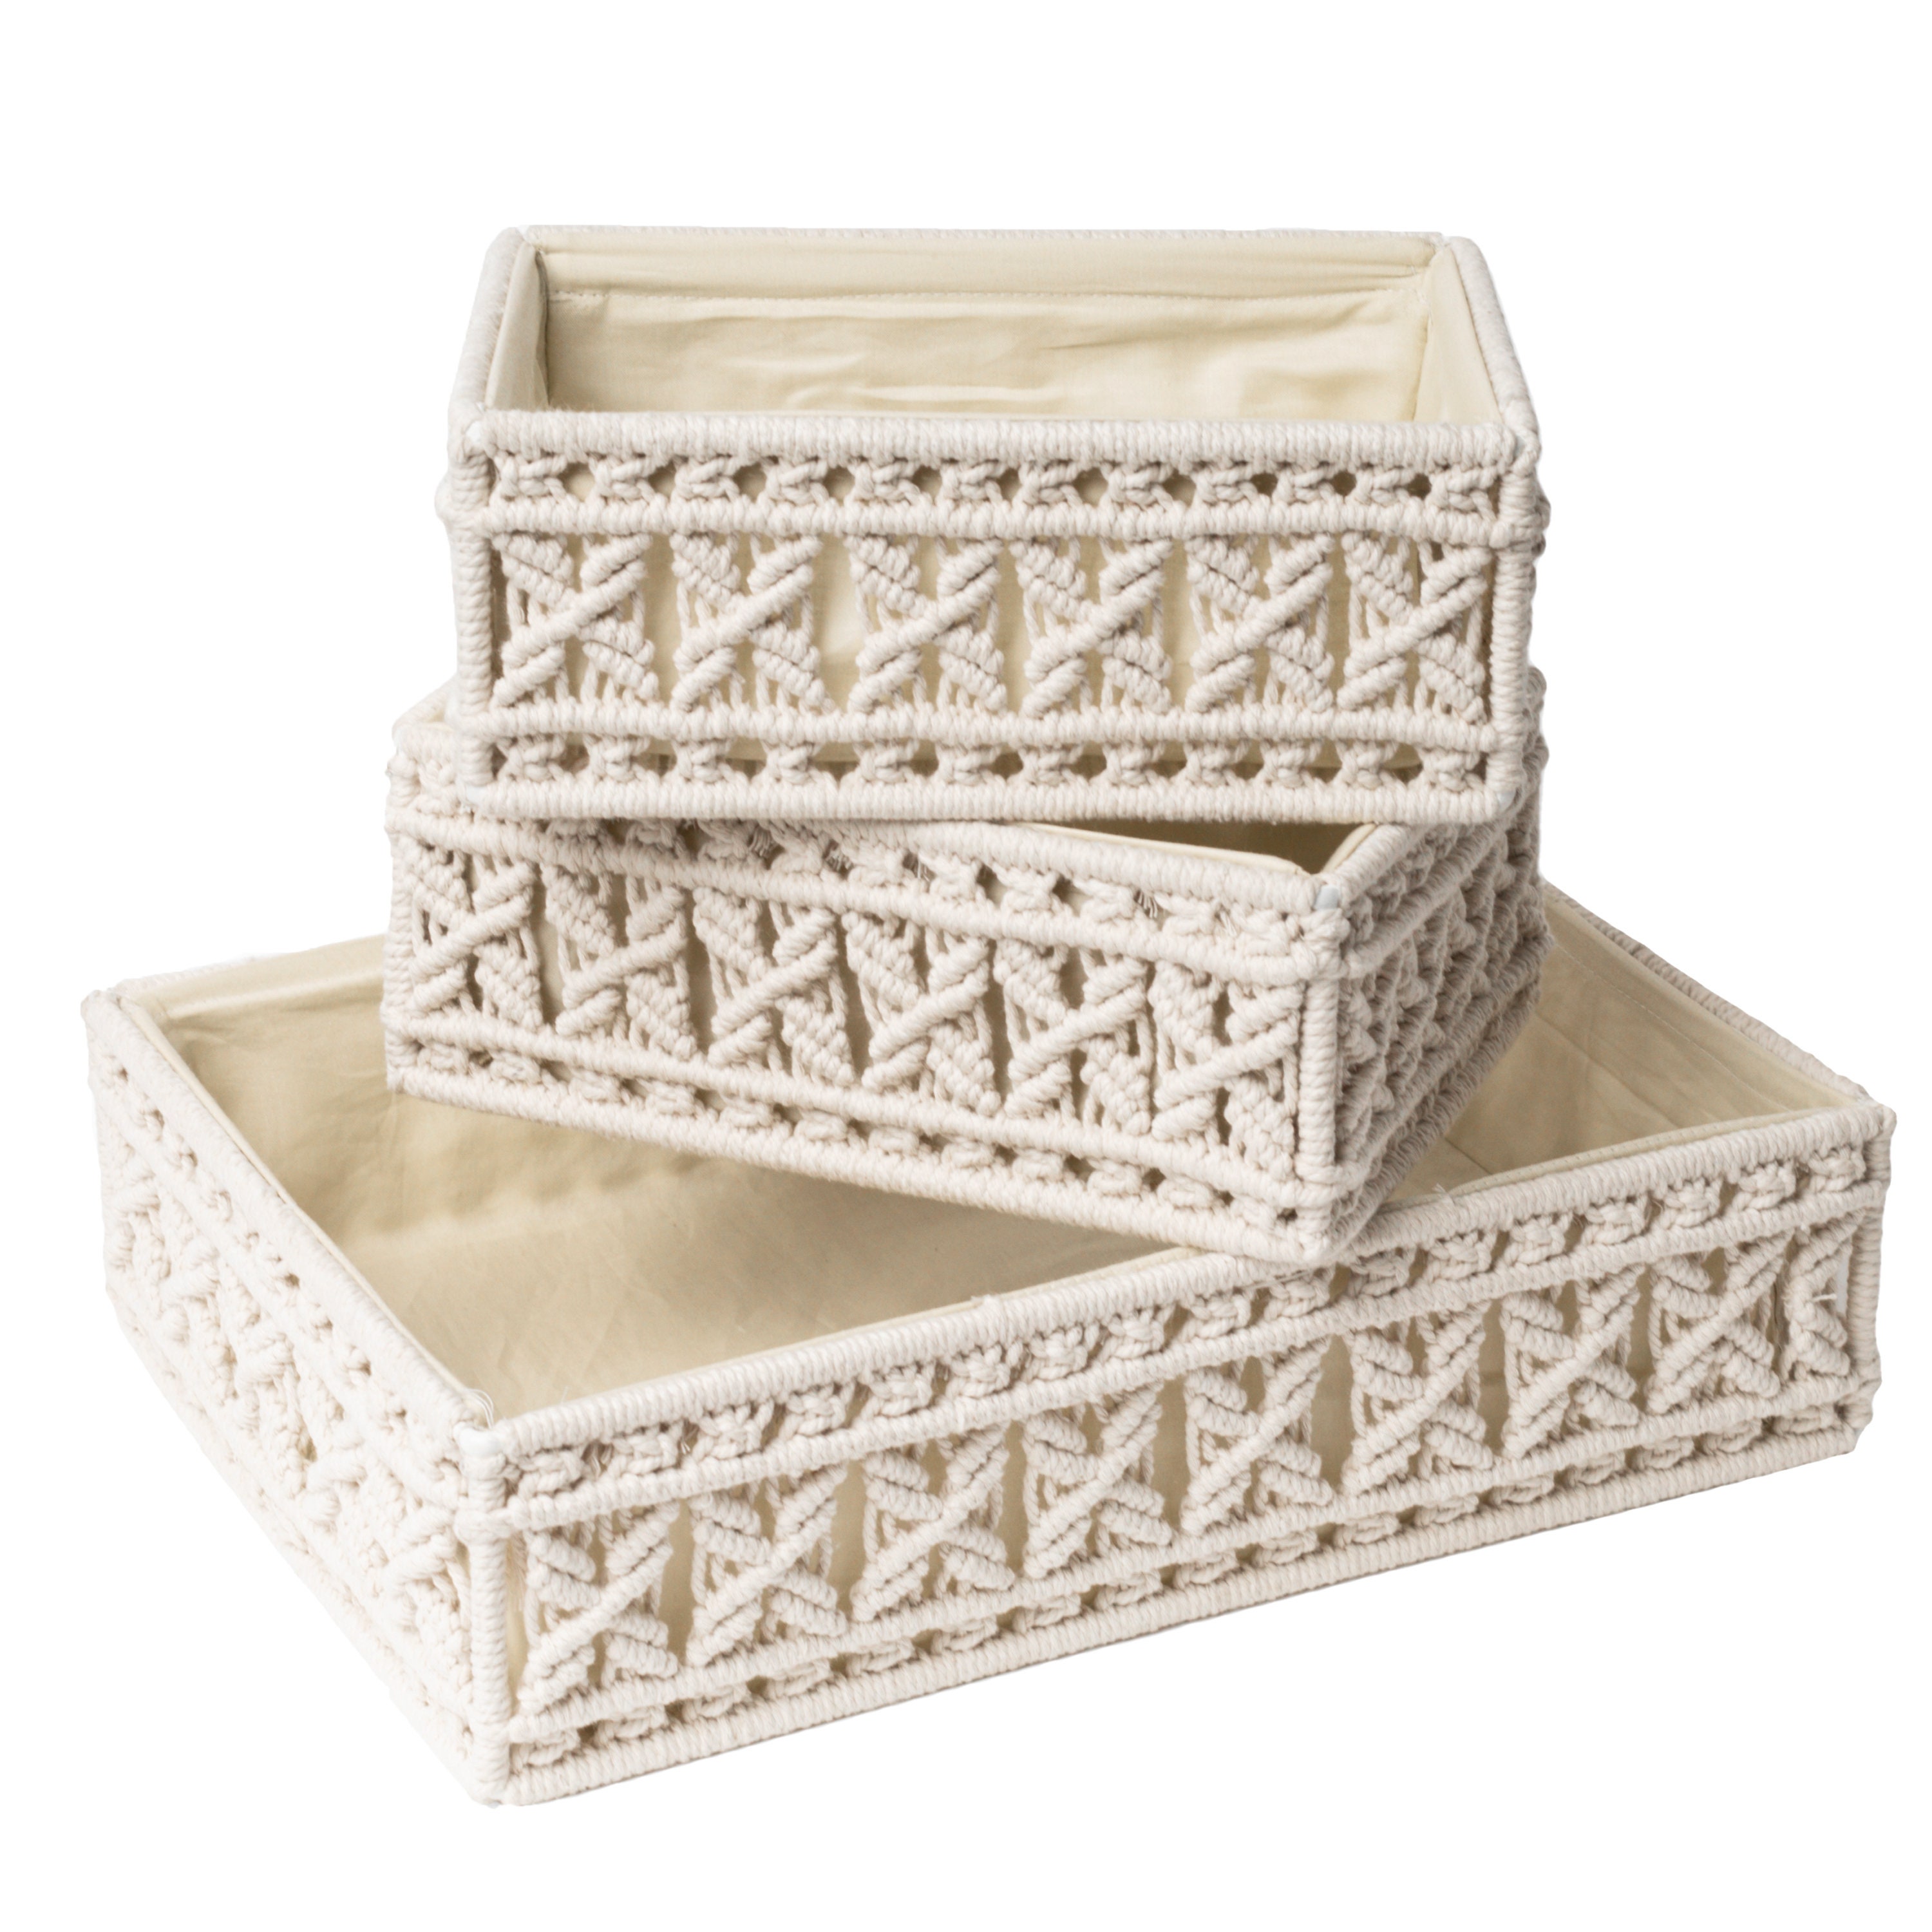 cotton macrame storage decorative hamper baskets manufacturer, exporter and supplier